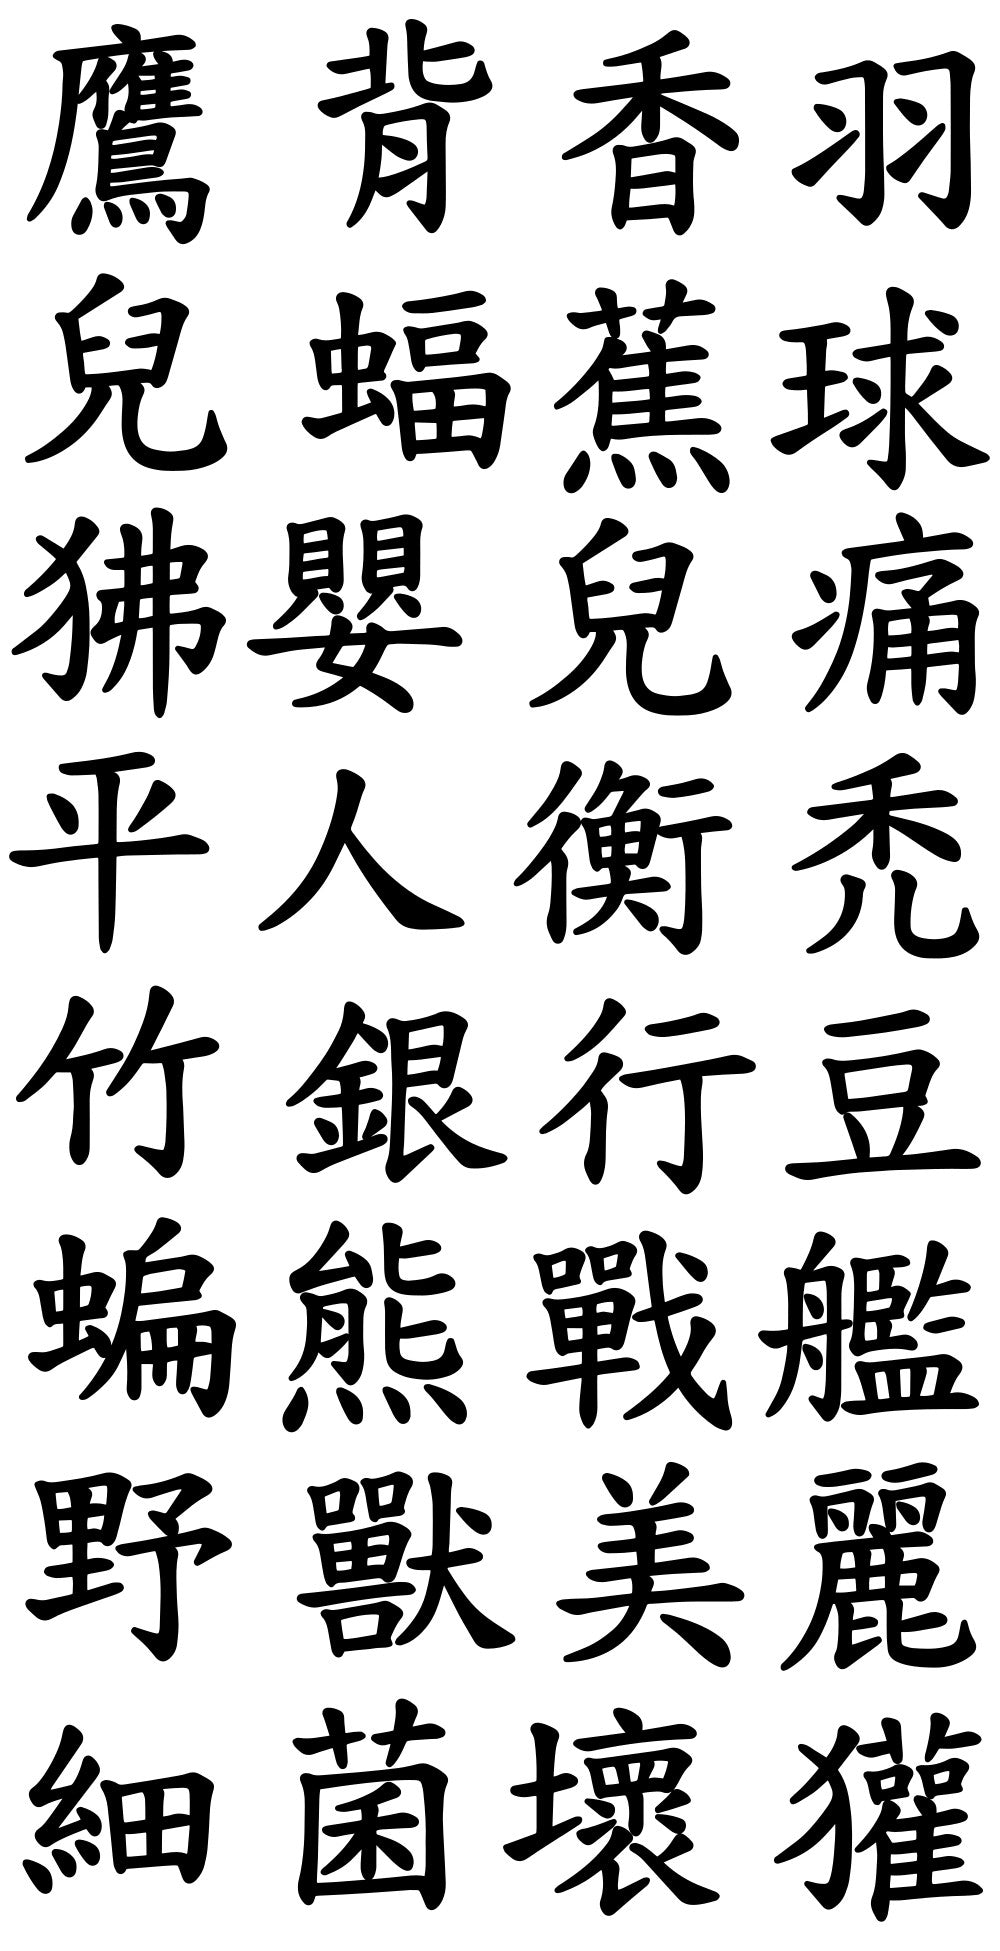 Random Japanese Kanji Characters Set of 3